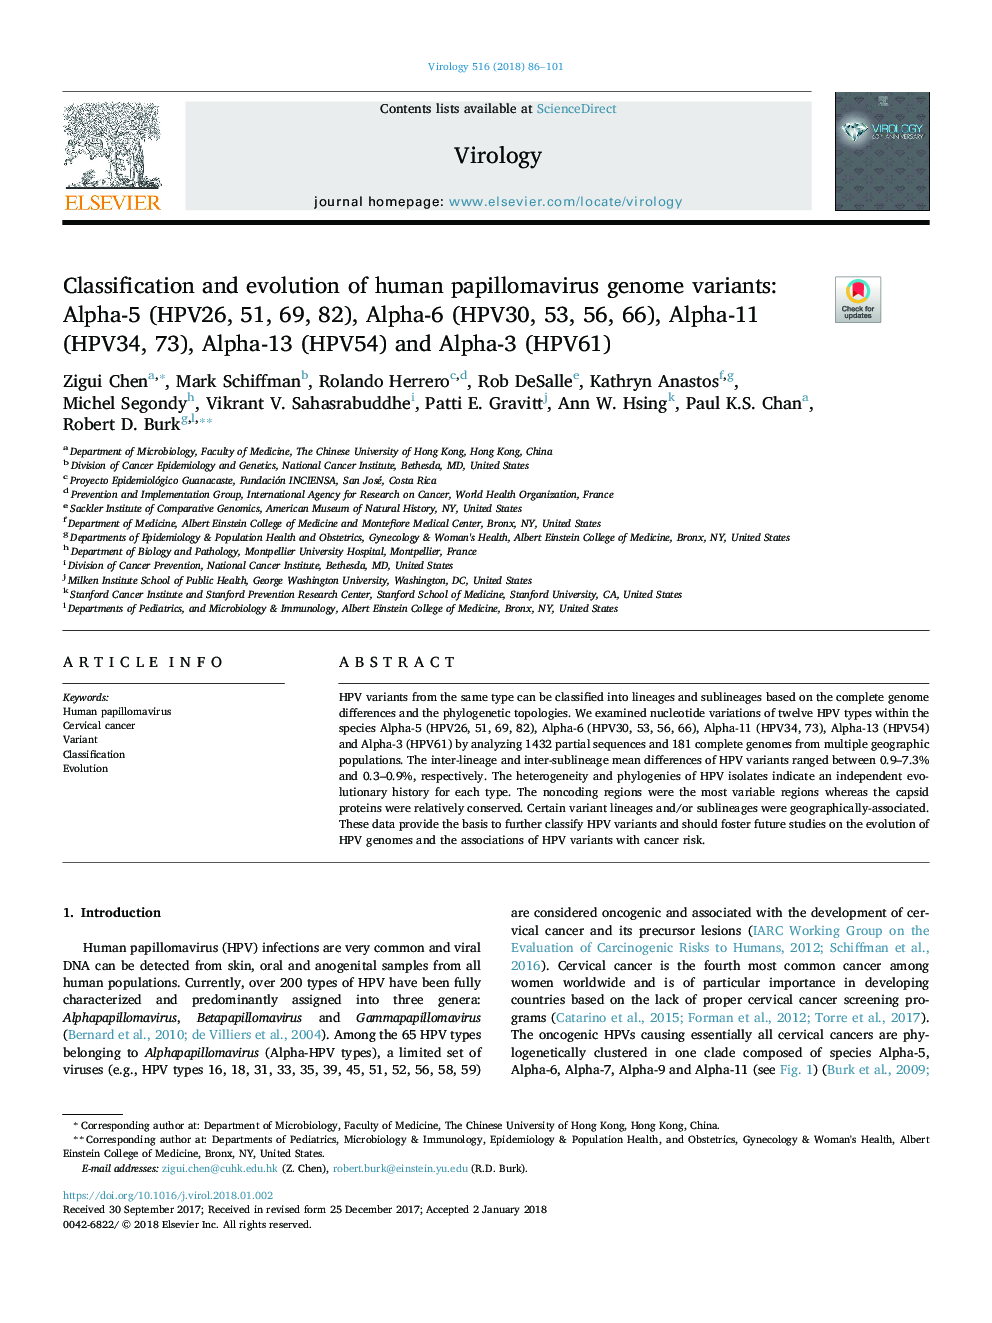 Classification and evolution of human papillomavirus genome variants: Alpha-5 (HPV26, 51, 69, 82), Alpha-6 (HPV30, 53, 56, 66), Alpha-11 (HPV34, 73), Alpha-13 (HPV54) and Alpha-3 (HPV61)